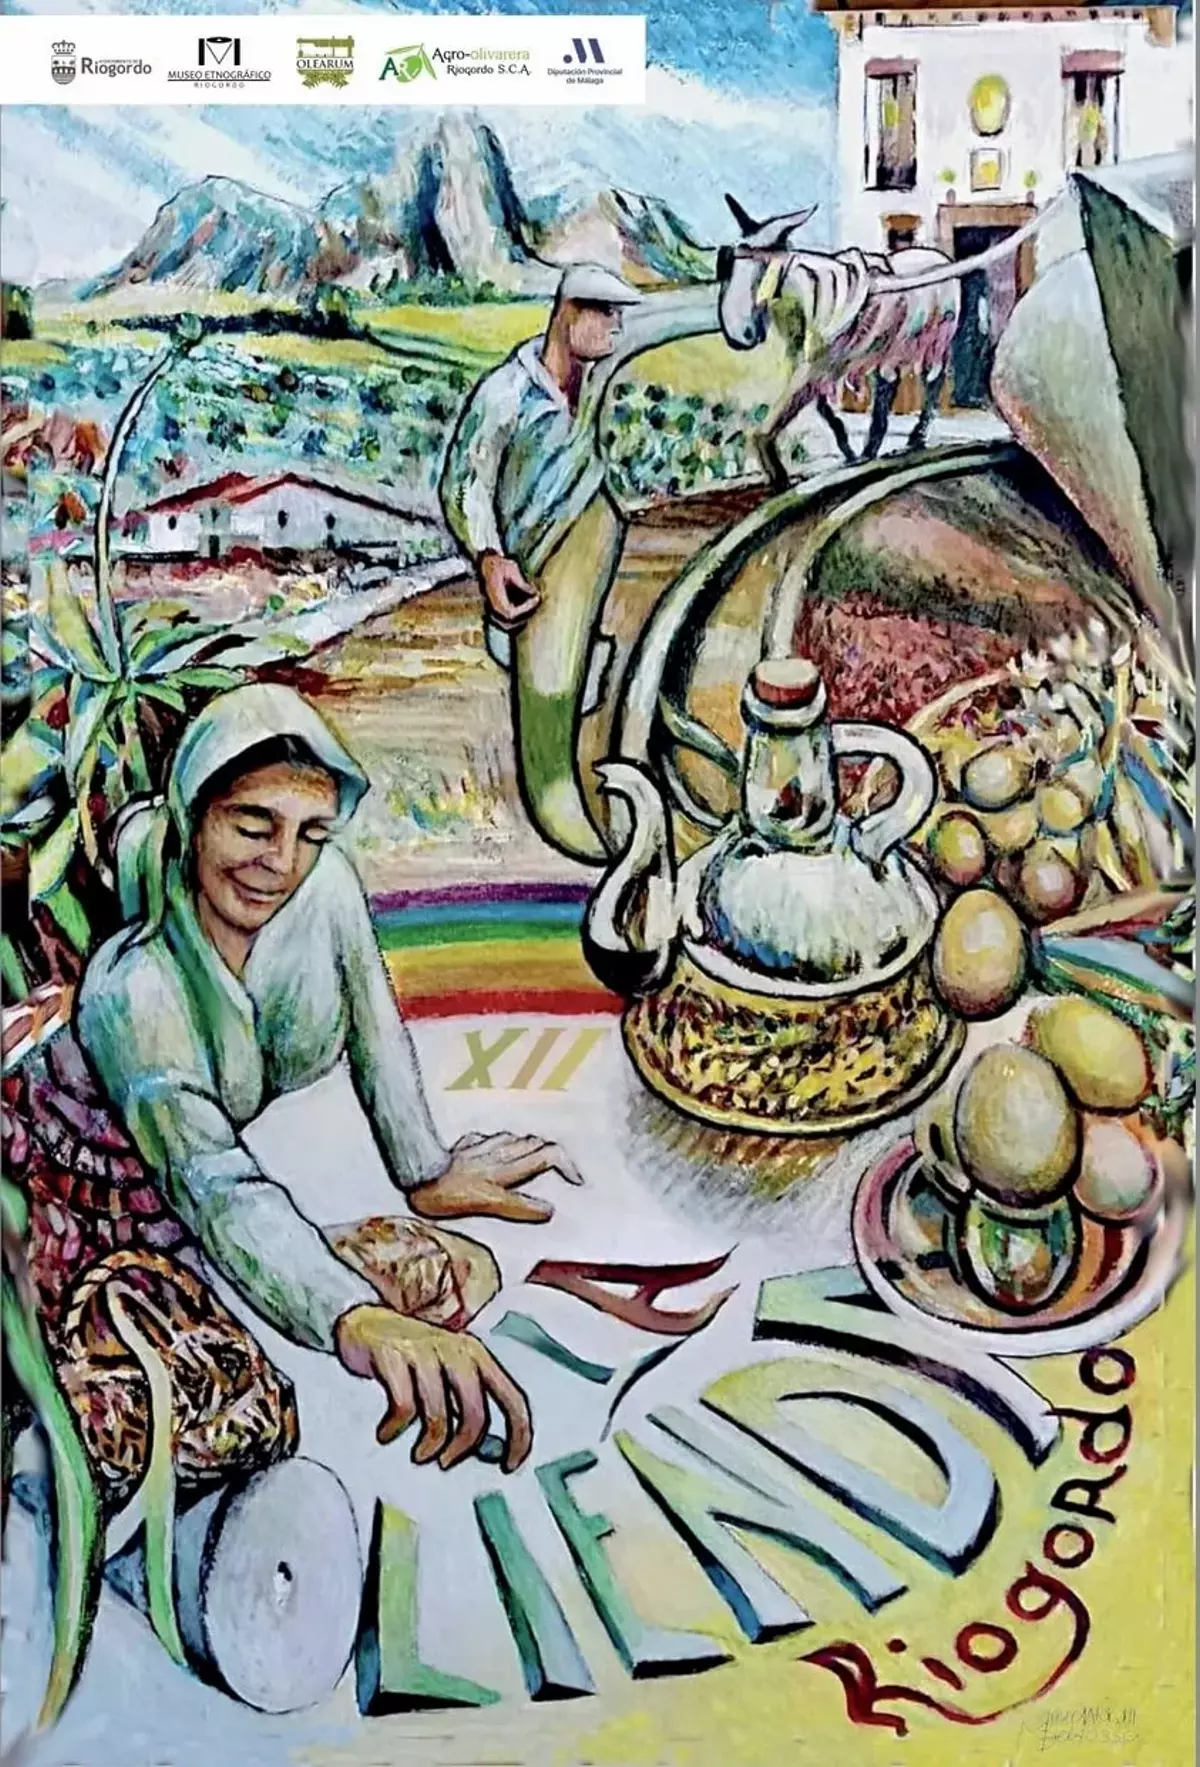 Cartel de la Fiesta de la Molienda de Riogordo.